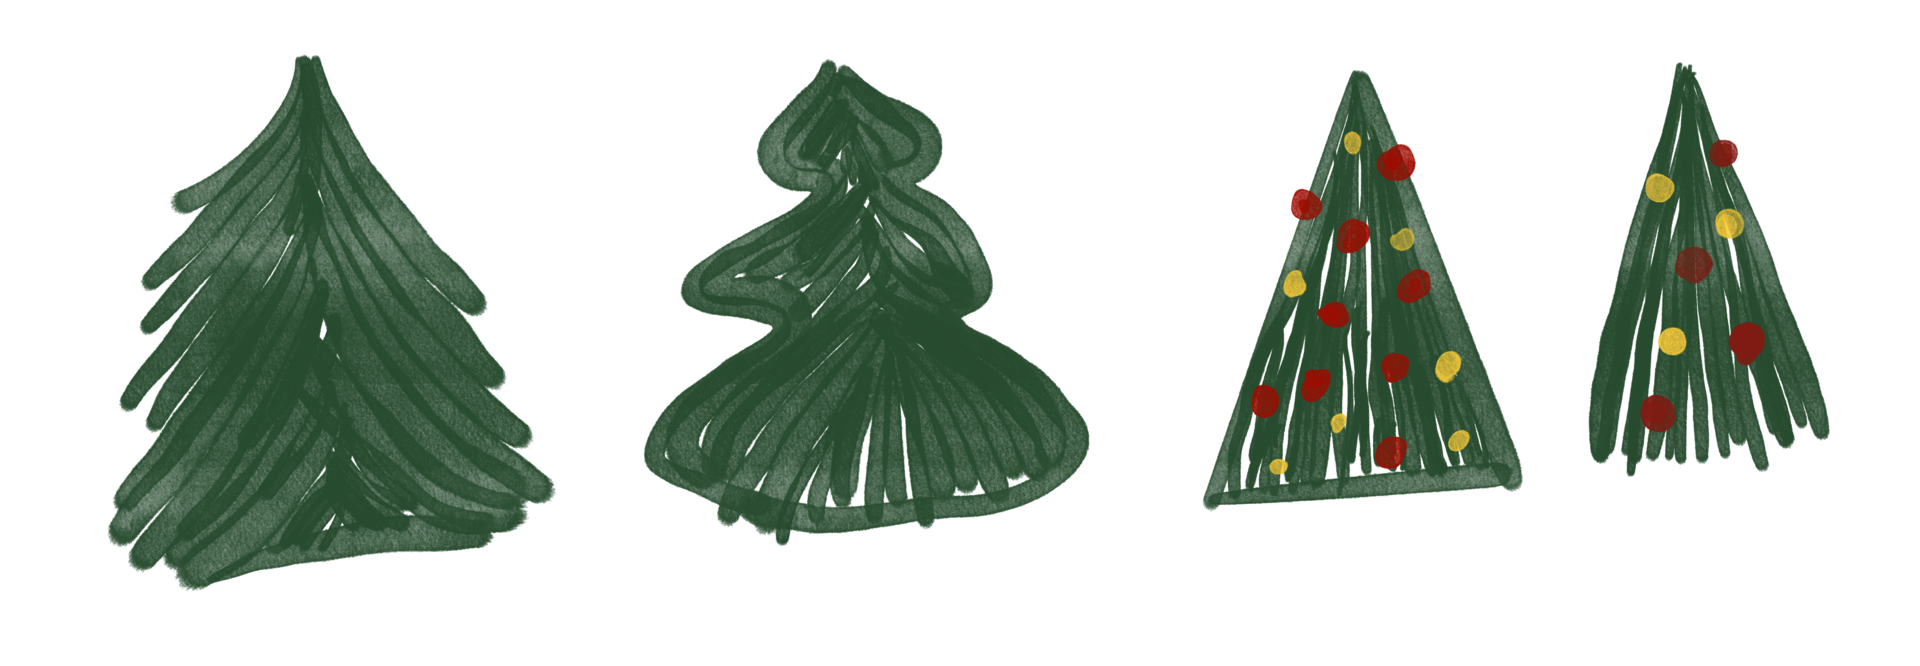 Christmas tree watercolor png